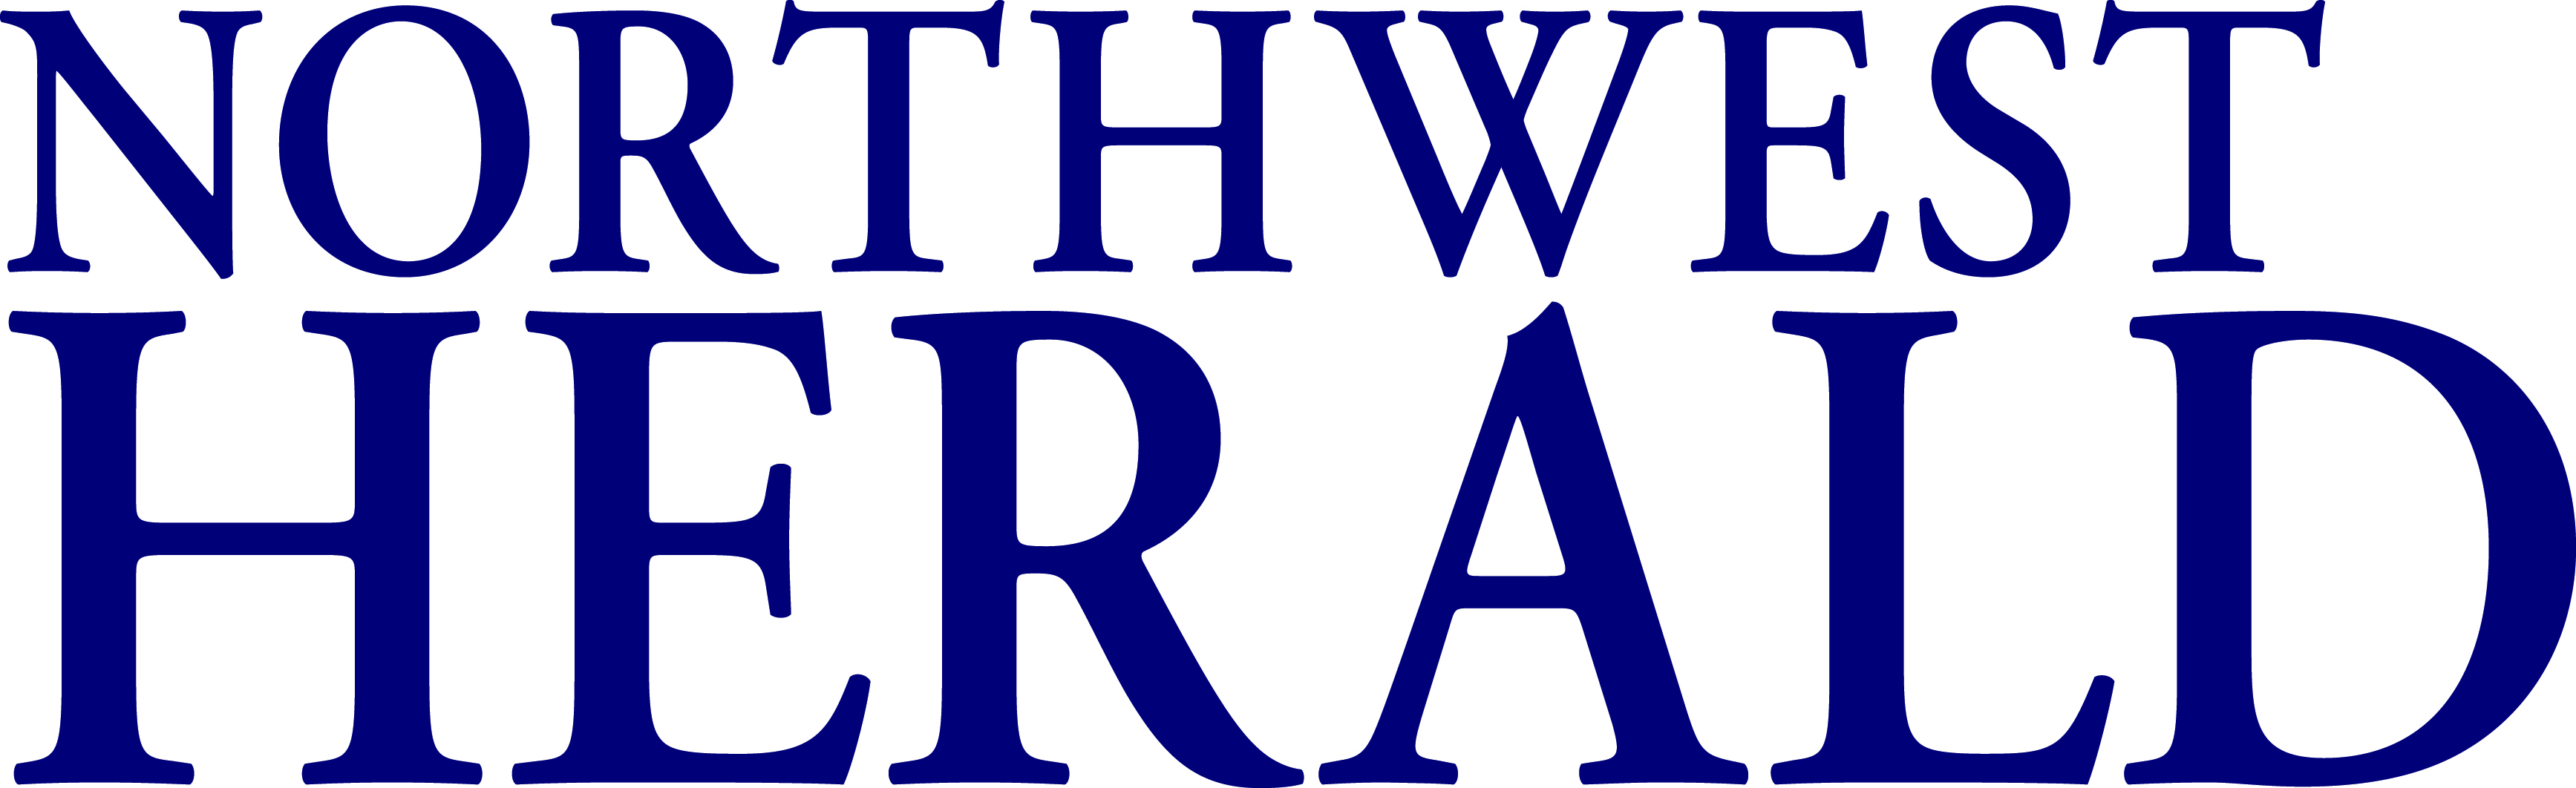 Northwest Herald logo_4C (2014)